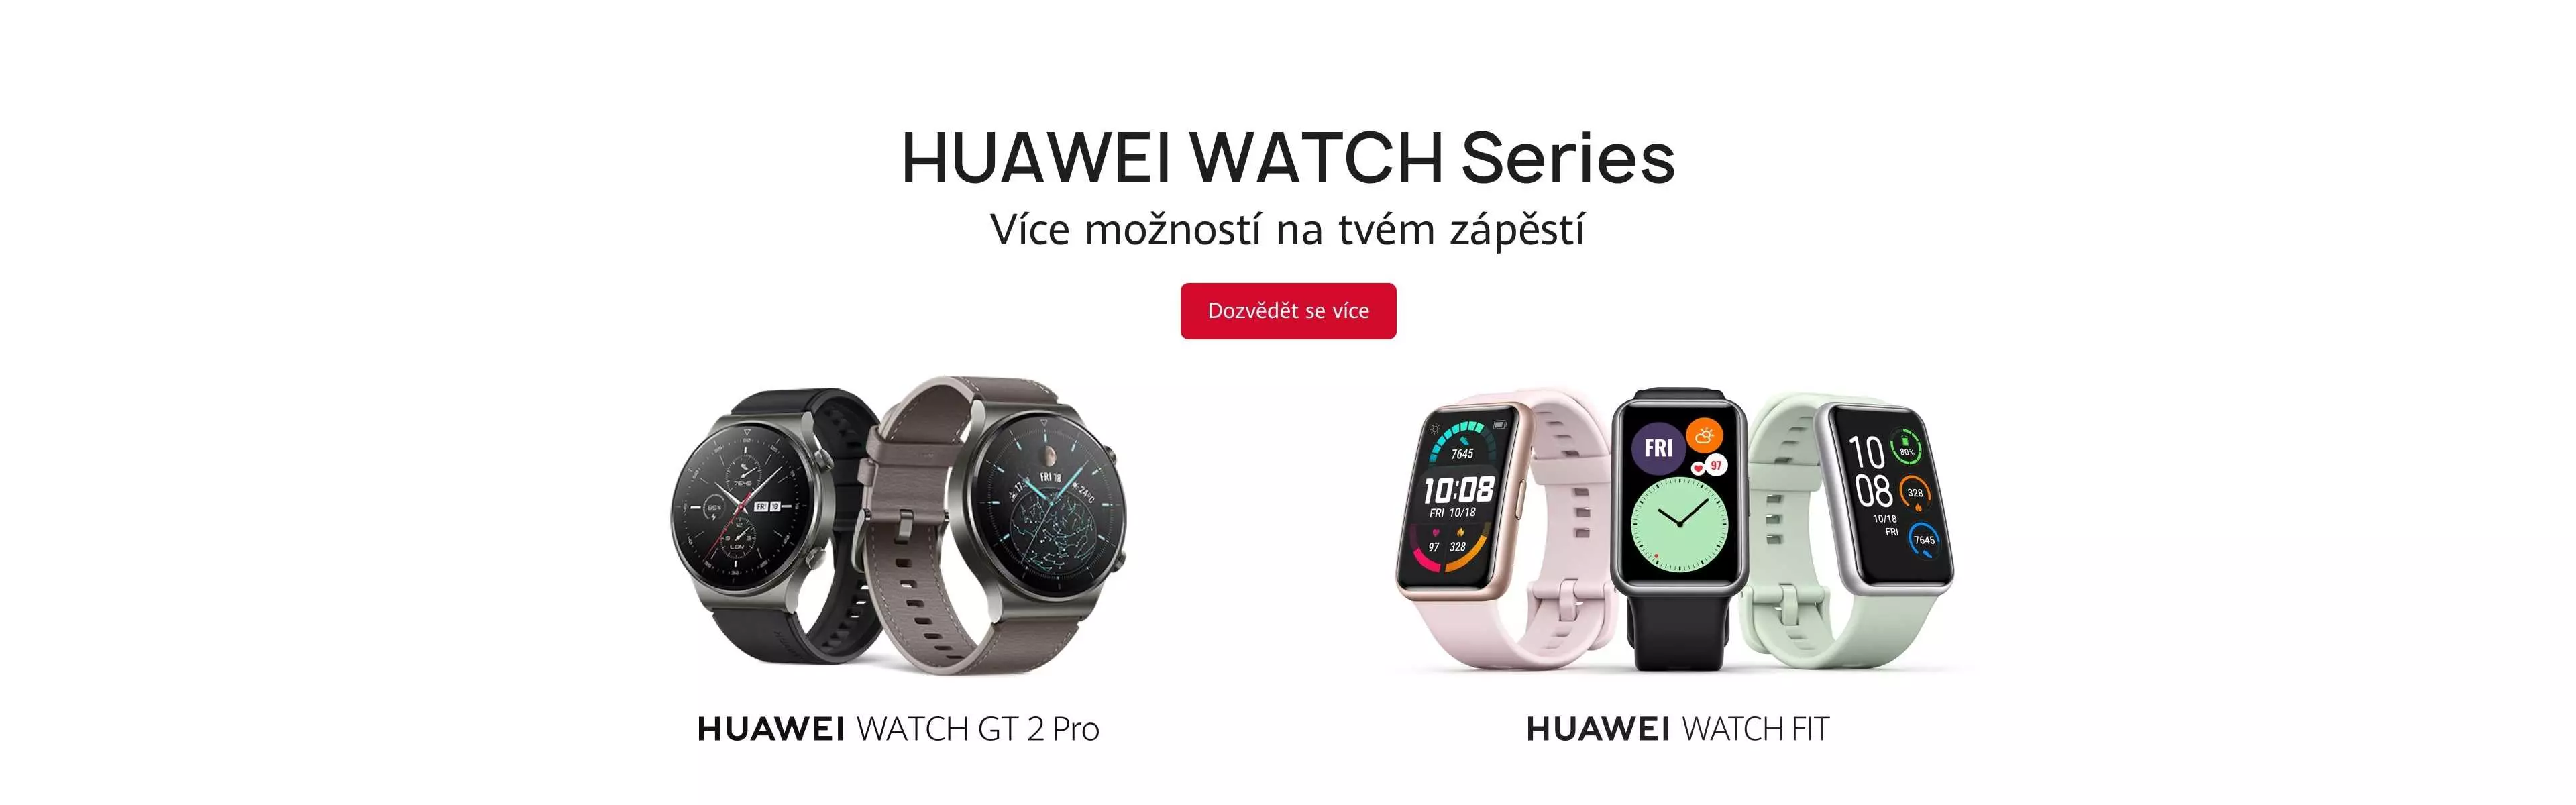 Huawei hodinky